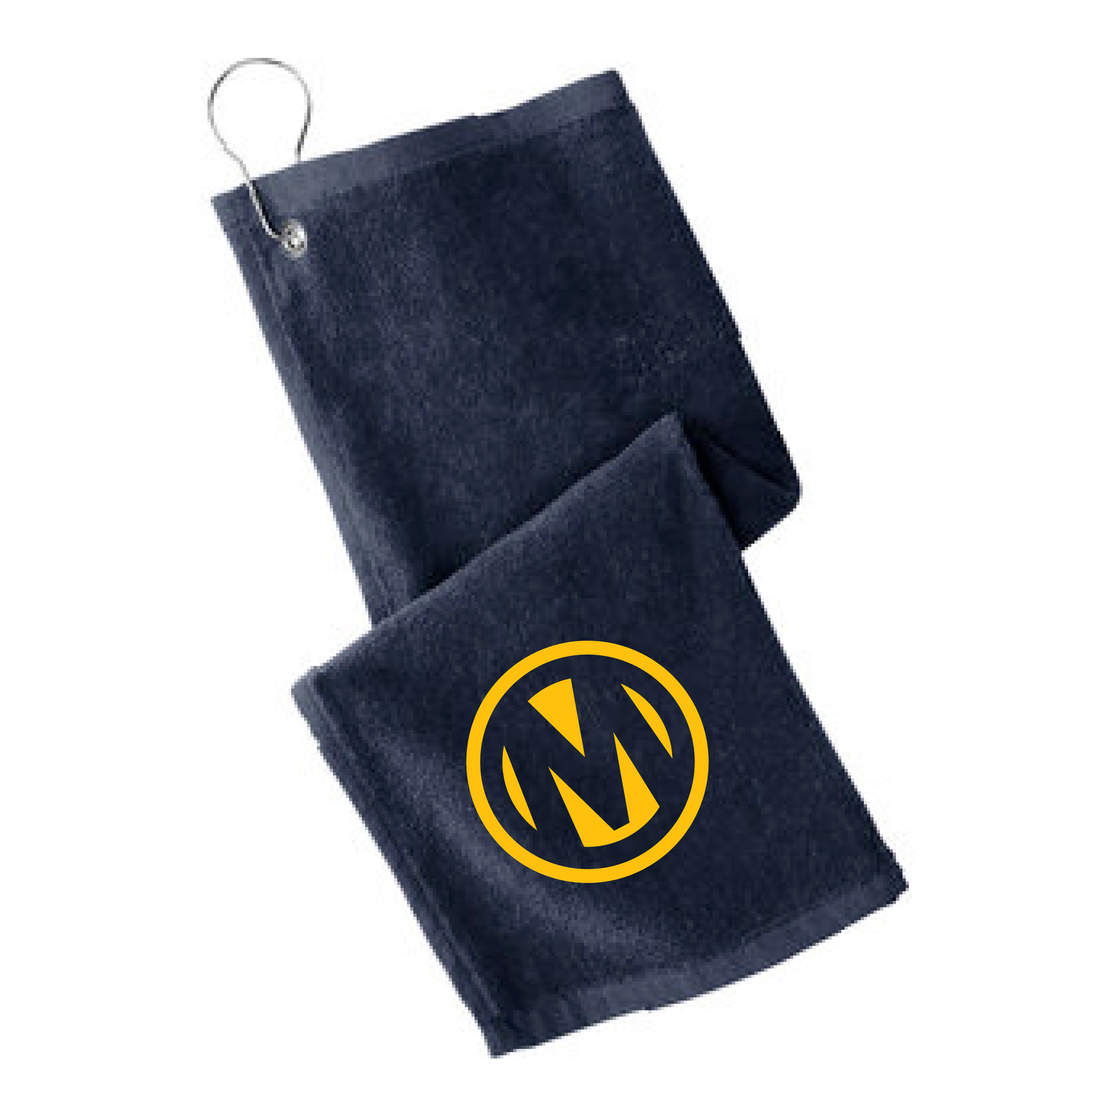 Manheim Utah Golf Shoe Bag & Towel